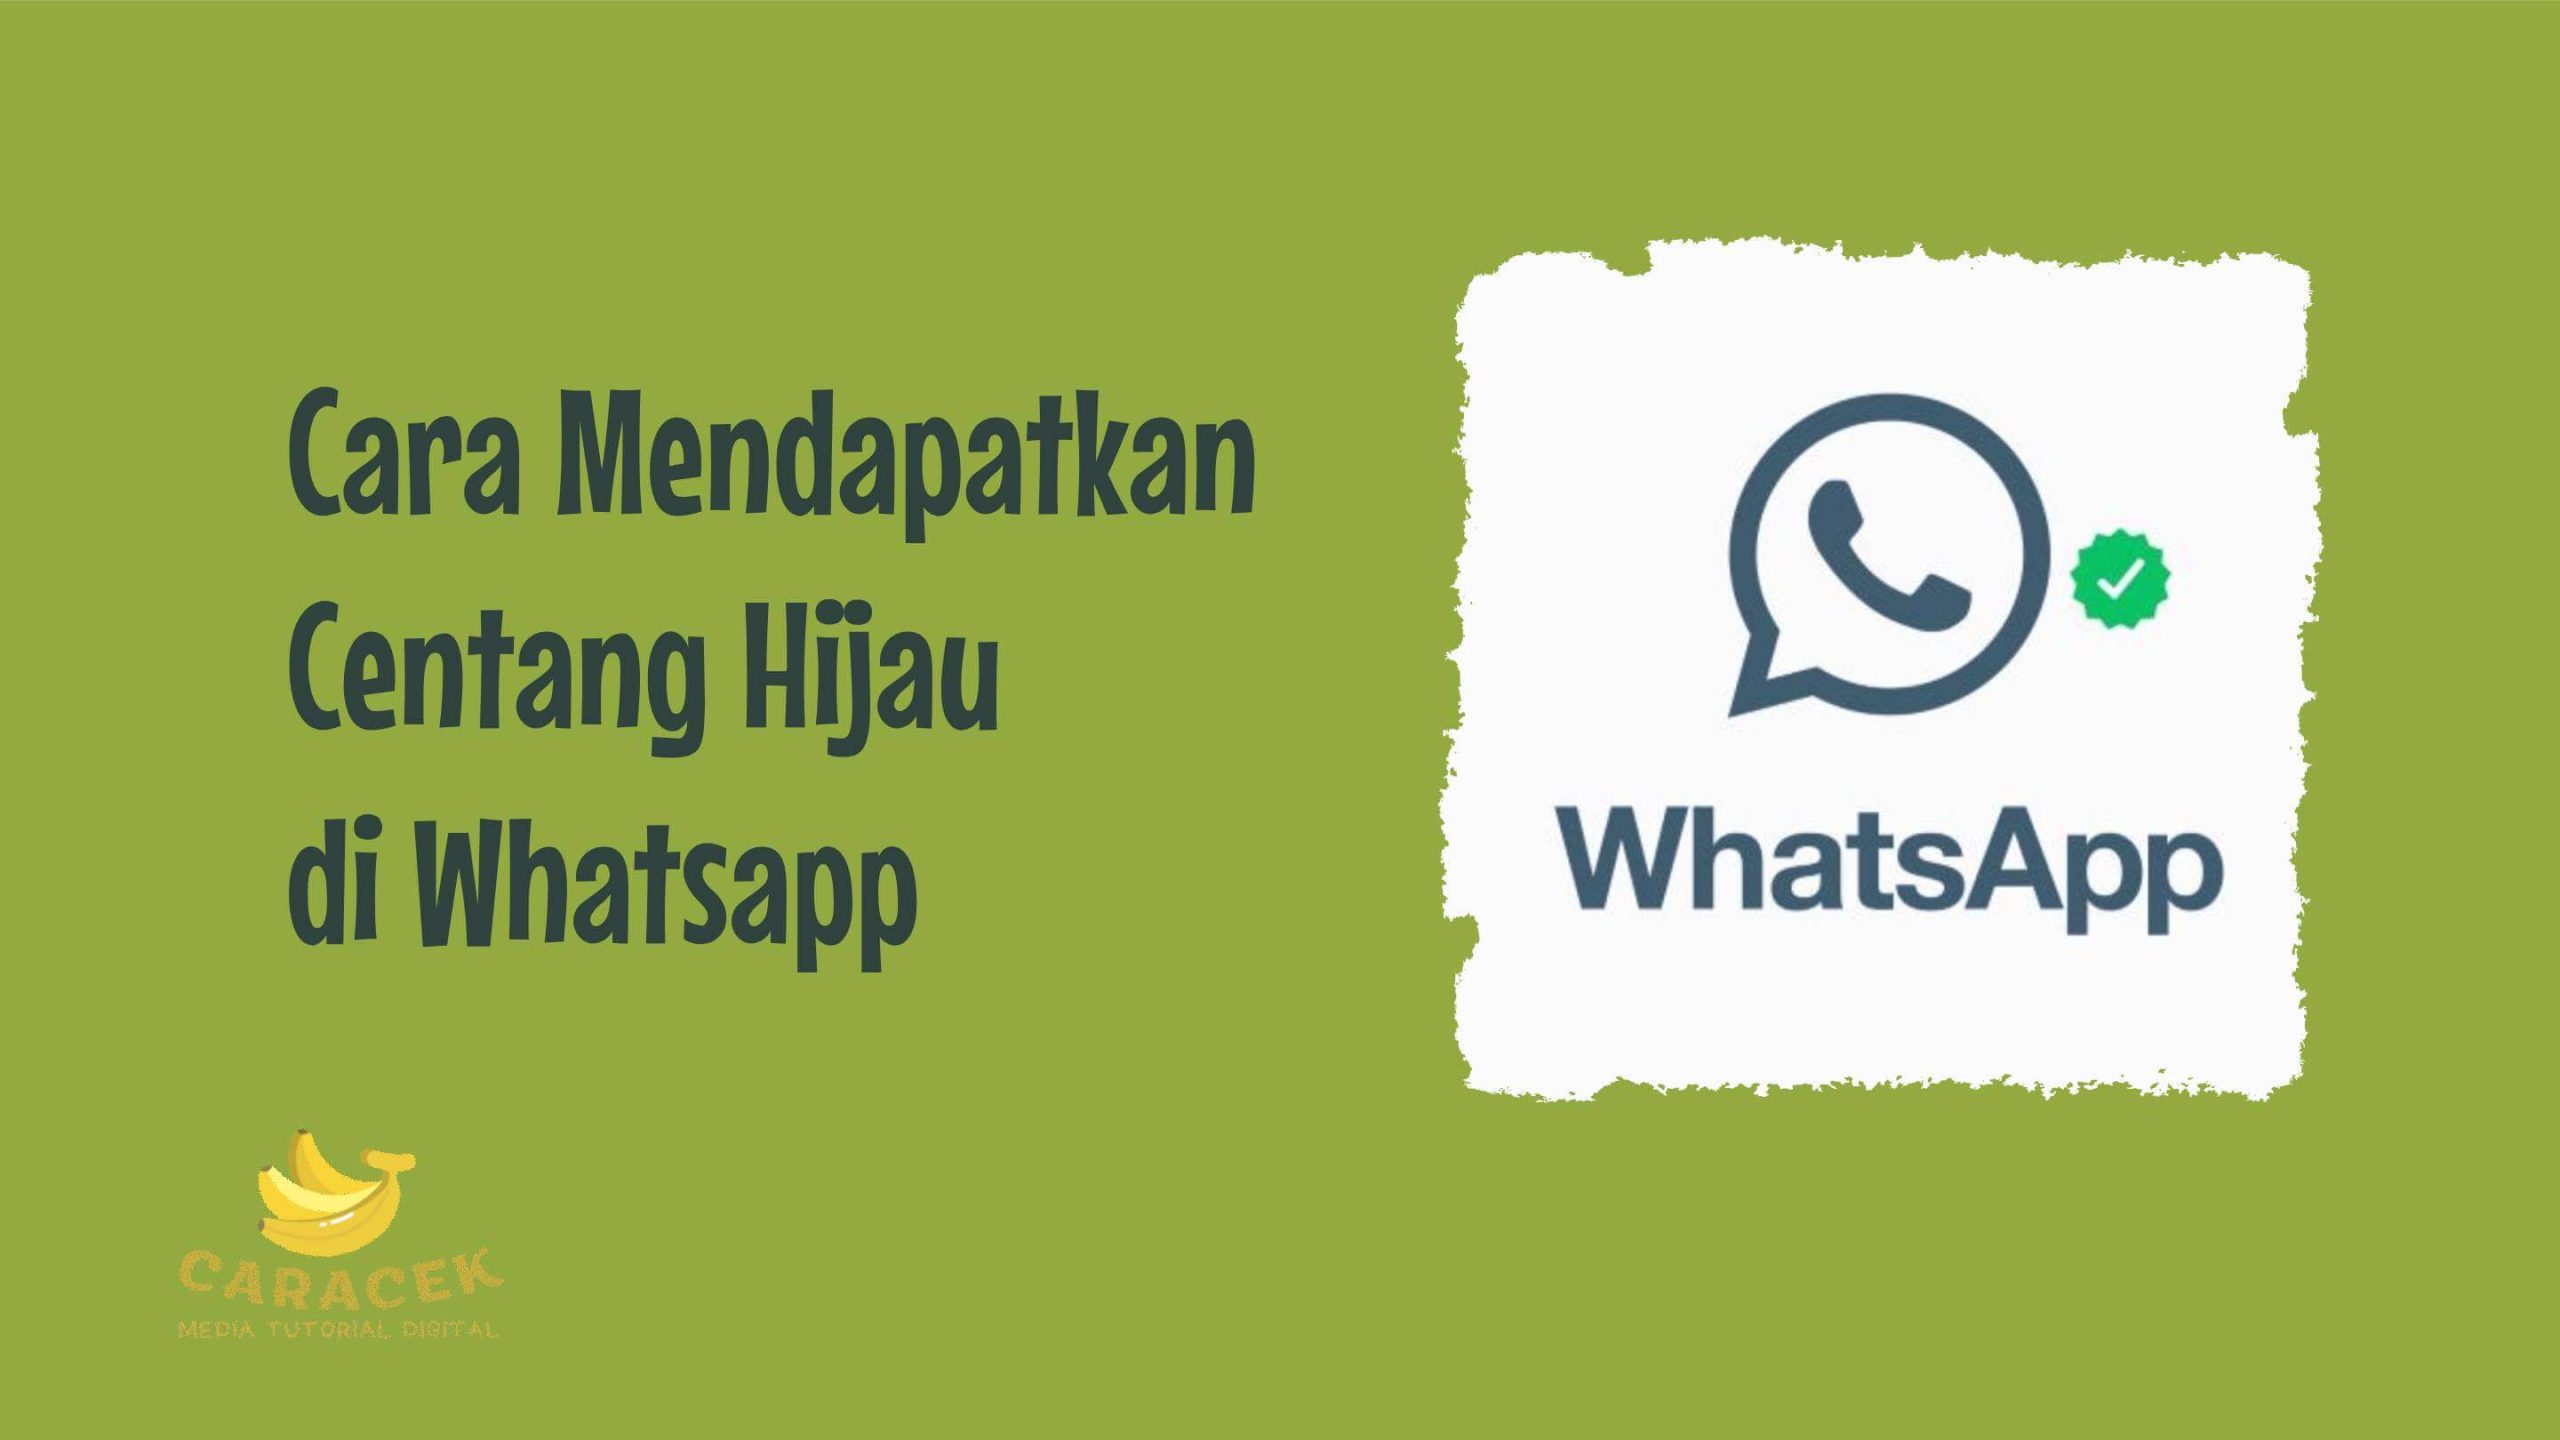 Centang Hijau di Whatsapp